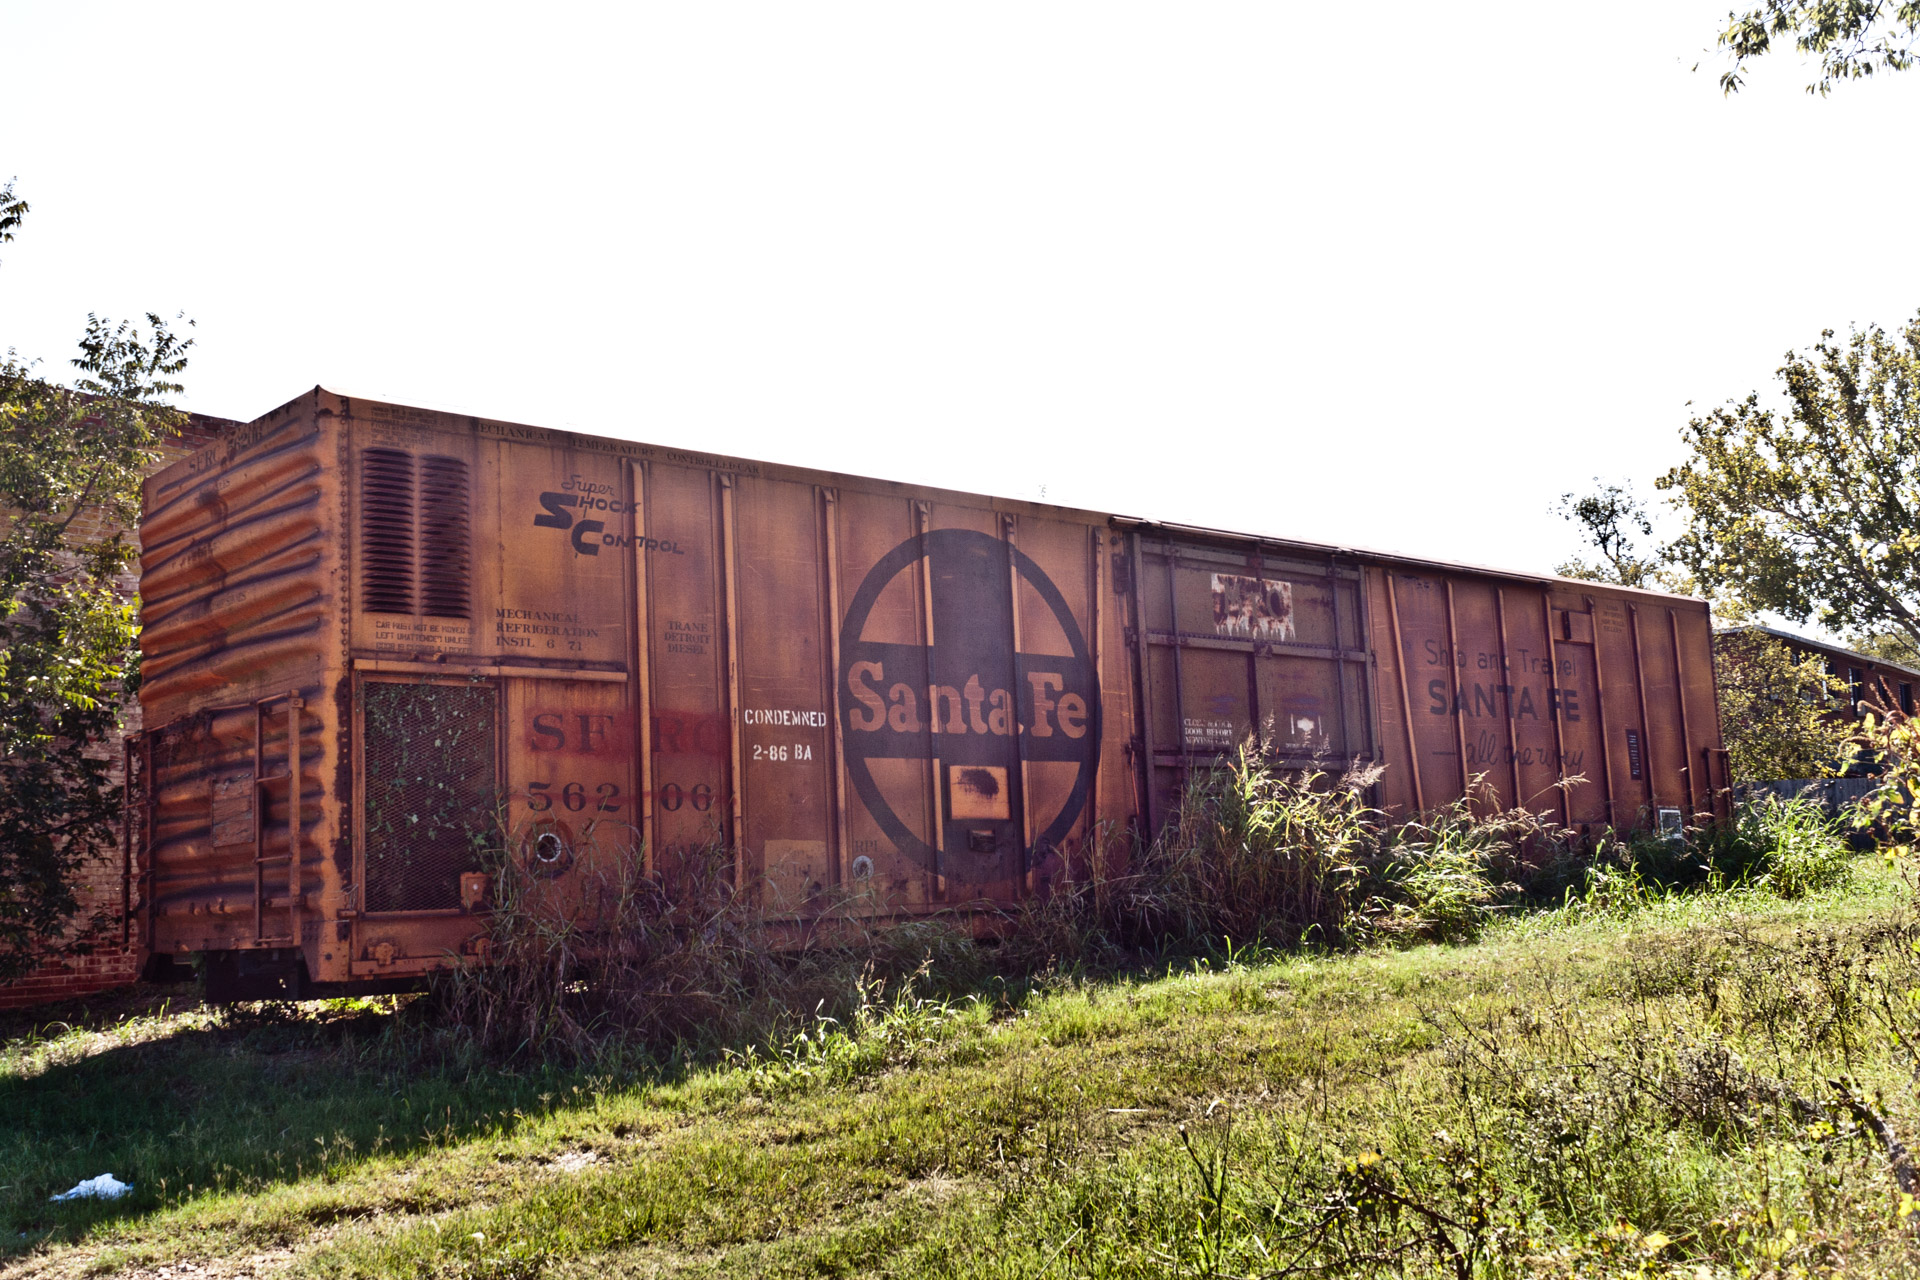 A Condemned Railroad Car